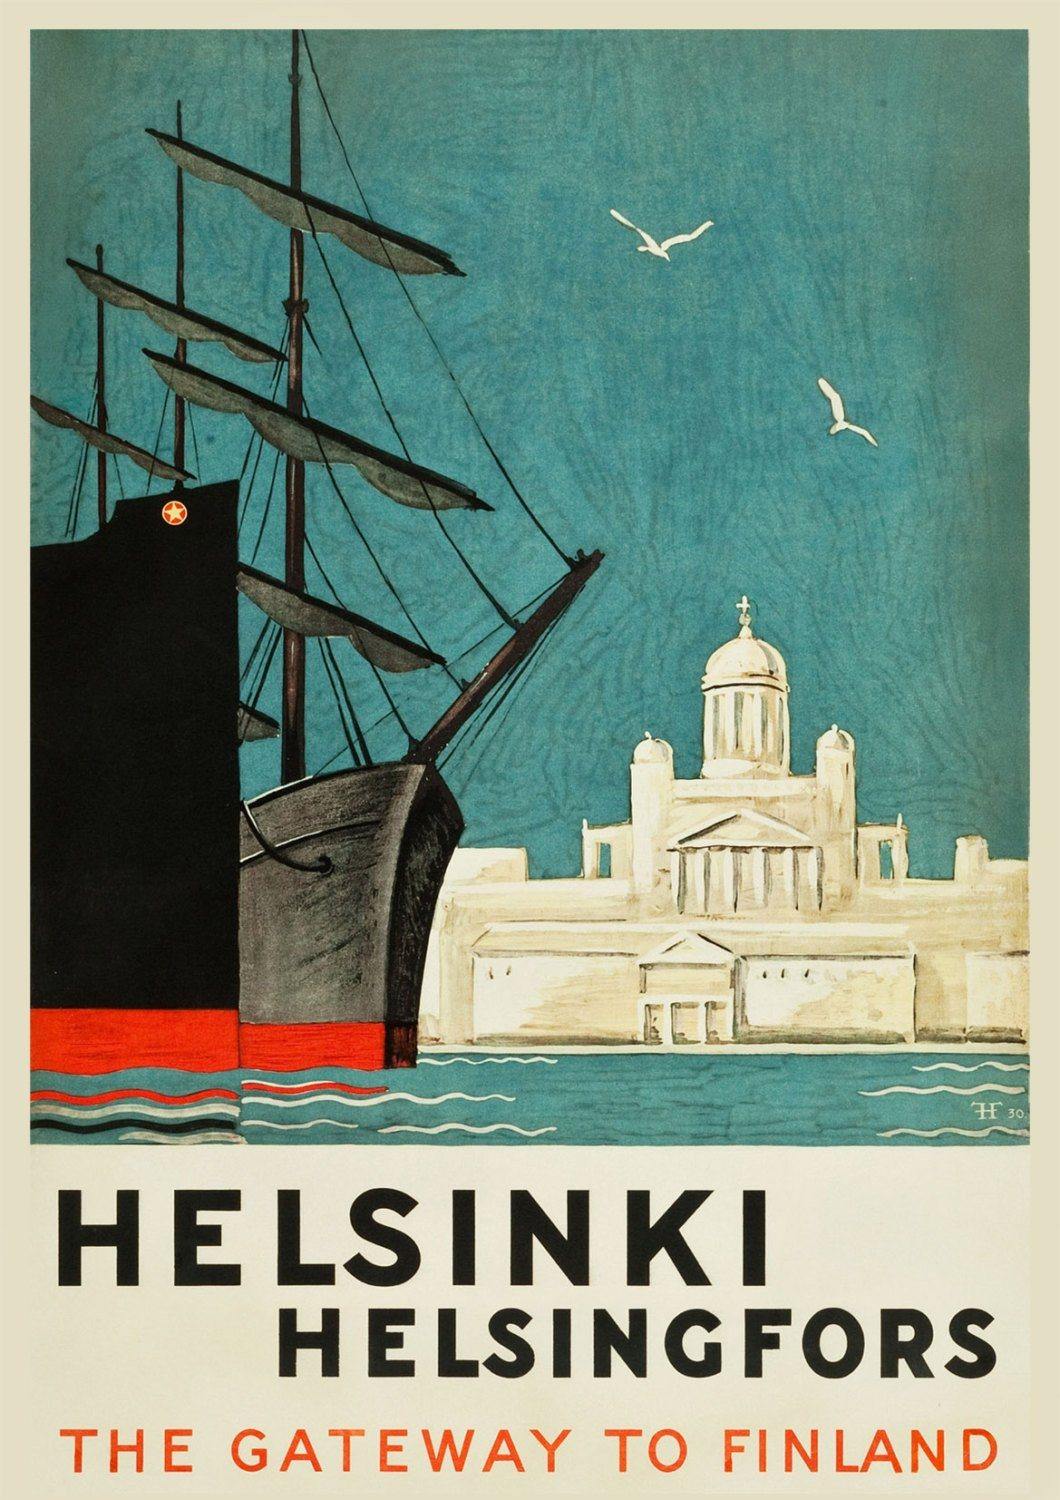 HELSINKI TRAVEL POSTER: Vintage Finland Travel Advert - Pimlico Prints